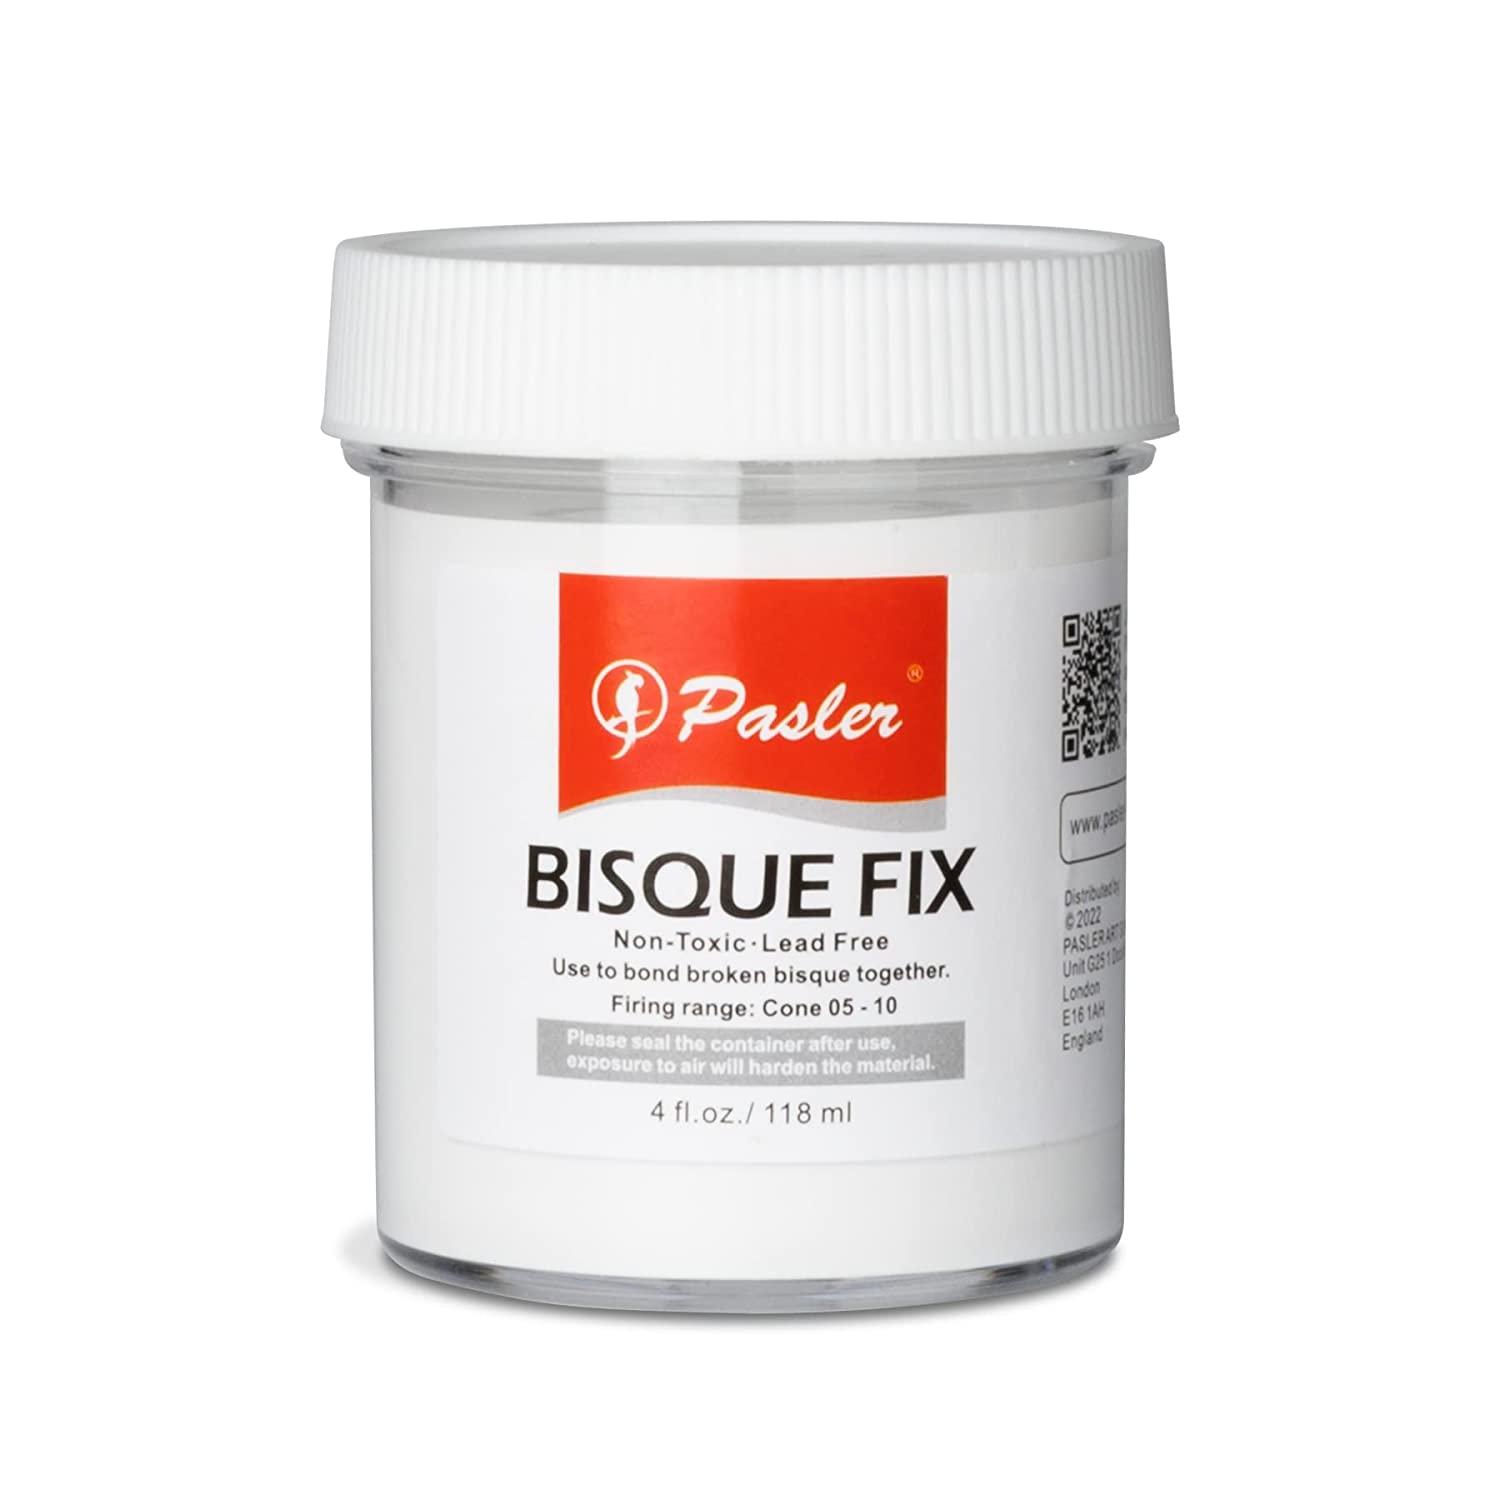 Bisque fix for bond broken bisque together. 4 fl oz / 118 ml – Pasler Art